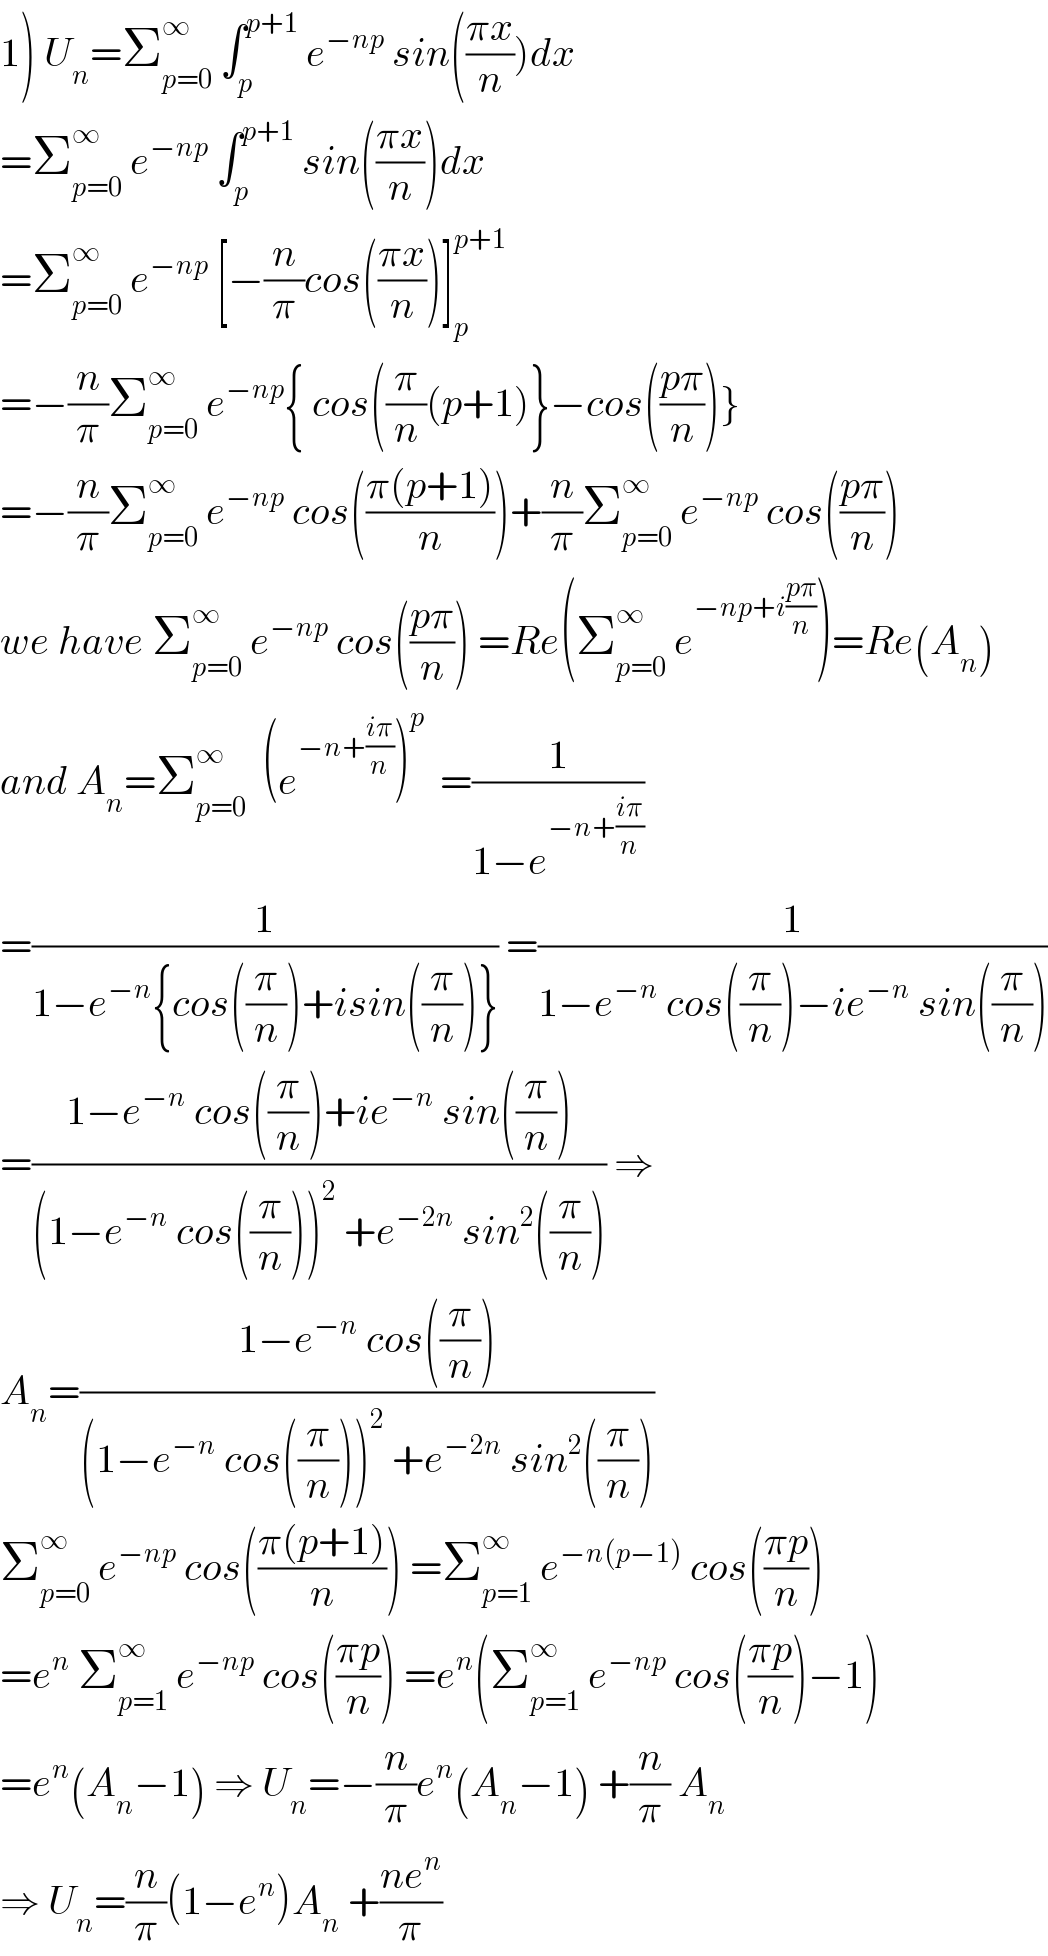 1) U_n =Σ_(p=0) ^∞  ∫_p ^(p+1)  e^(−np)  sin(((πx)/n))dx  =Σ_(p=0) ^∞  e^(−np)  ∫_p ^(p+1)  sin(((πx)/n))dx   =Σ_(p=0) ^∞  e^(−np)  [−(n/π)cos(((πx)/n))]_p ^(p+1)   =−(n/π)Σ_(p=0) ^∞  e^(−np) { cos((π/n)(p+1)}−cos(((pπ)/n))}  =−(n/π)Σ_(p=0) ^∞  e^(−np)  cos(((π(p+1))/n))+(n/π)Σ_(p=0) ^∞  e^(−np)  cos(((pπ)/n))  we have Σ_(p=0) ^∞  e^(−np)  cos(((pπ)/n)) =Re(Σ_(p=0) ^∞  e^(−np+i((pπ)/n)) )=Re(A_n )  and A_n =Σ_(p=0) ^∞   (e^(−n+((iπ)/n)) )^p   =(1/(1−e^(−n+((iπ)/n)) ))  =(1/(1−e^(−n) {cos((π/n))+isin((π/n))})) =(1/(1−e^(−n)  cos((π/n))−ie^(−n)  sin((π/n))))  =((1−e^(−n)  cos((π/n))+ie^(−n)  sin((π/n)))/((1−e^(−n)  cos((π/n)))^2  +e^(−2n)  sin^2 ((π/n)))) ⇒  A_n =((1−e^(−n)  cos((π/n)))/((1−e^(−n)  cos((π/n)))^2  +e^(−2n)  sin^2 ((π/n))))  Σ_(p=0) ^∞  e^(−np)  cos(((π(p+1))/n)) =Σ_(p=1) ^∞  e^(−n(p−1))  cos(((πp)/n))  =e^n  Σ_(p=1) ^∞  e^(−np)  cos(((πp)/n)) =e^n (Σ_(p=1) ^∞  e^(−np)  cos(((πp)/n))−1)  =e^n (A_n −1) ⇒ U_n =−(n/π)e^n (A_n −1) +(n/π) A_n   ⇒ U_n =(n/π)(1−e^n )A_n  +((ne^n )/π)  